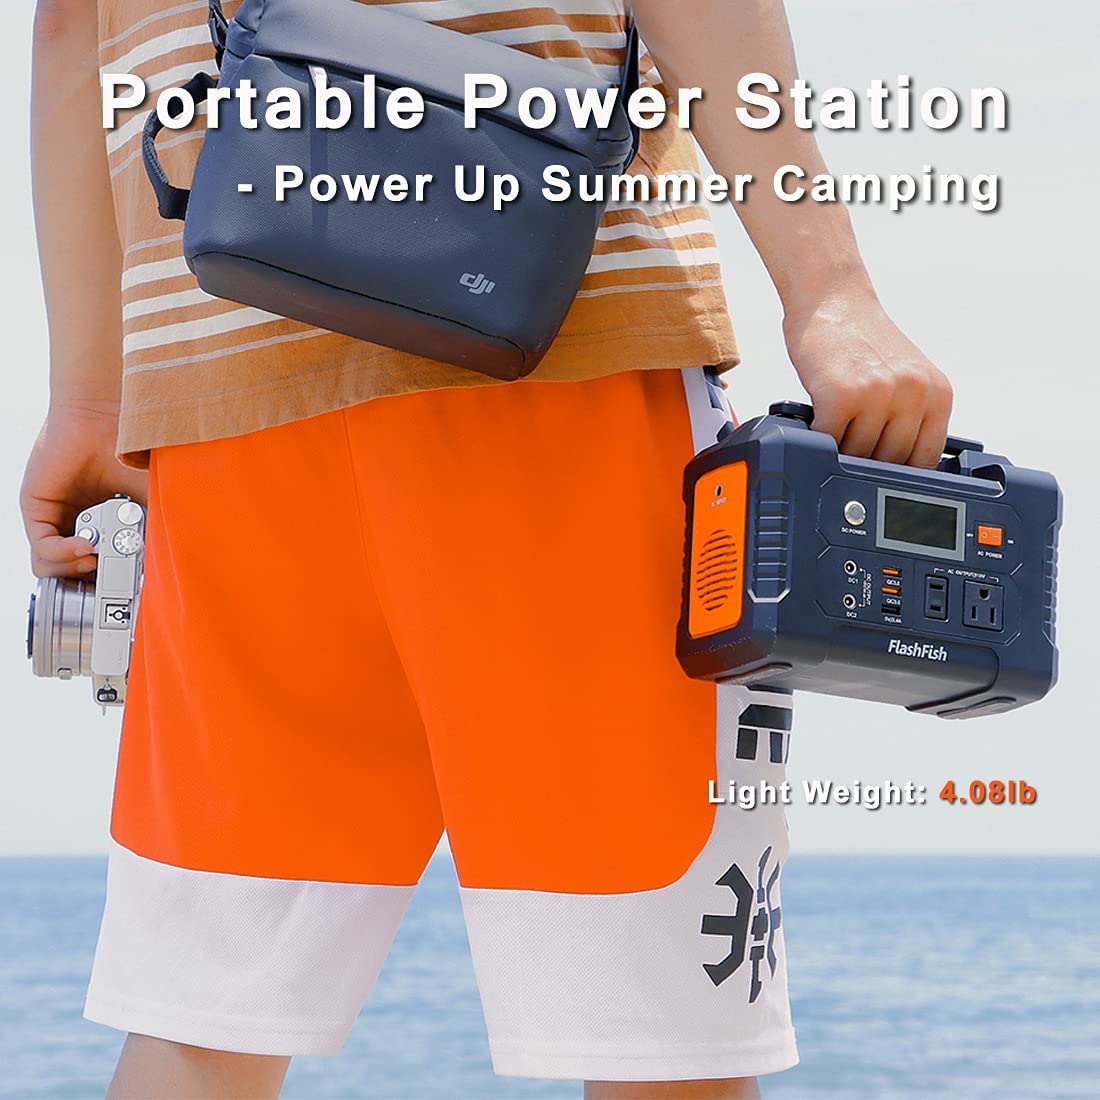 FF Flashfish 110V Portable Power Station